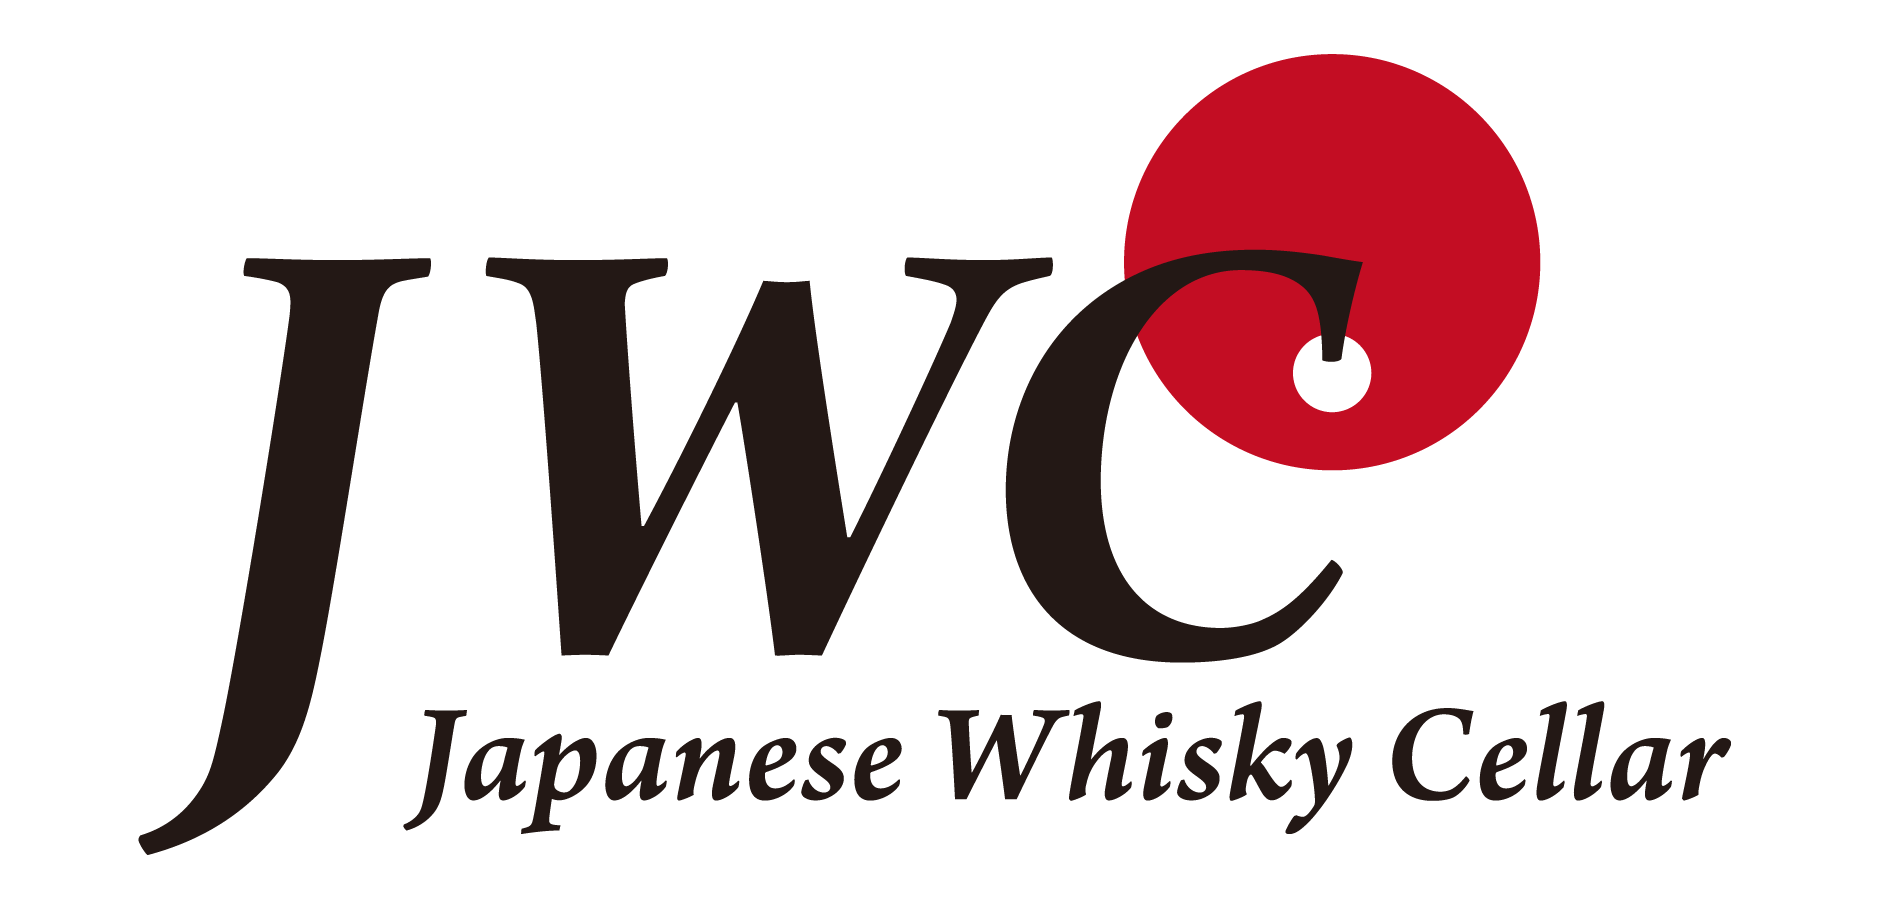 Japanese Whisky Cellar